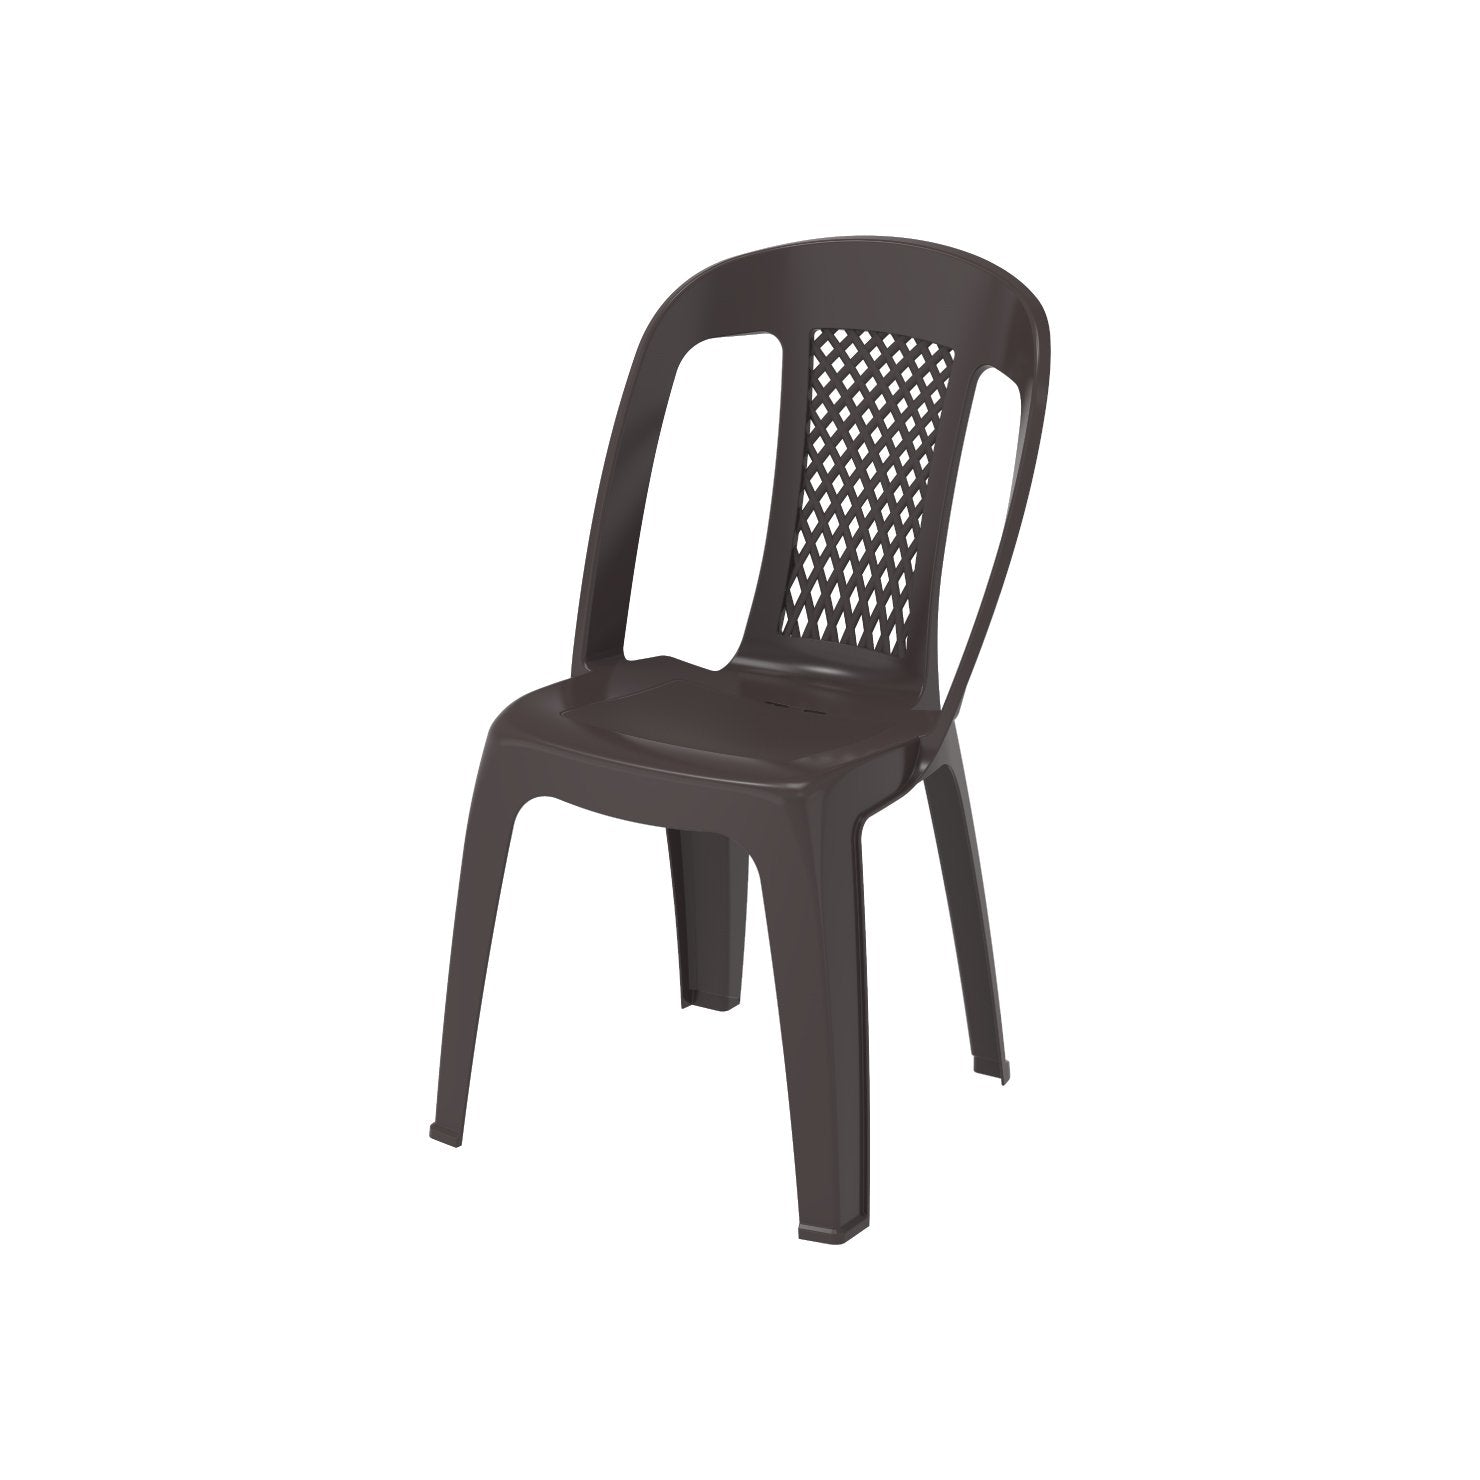 Regal Outdoor Garden Chair - Cosmoplast Bahrain